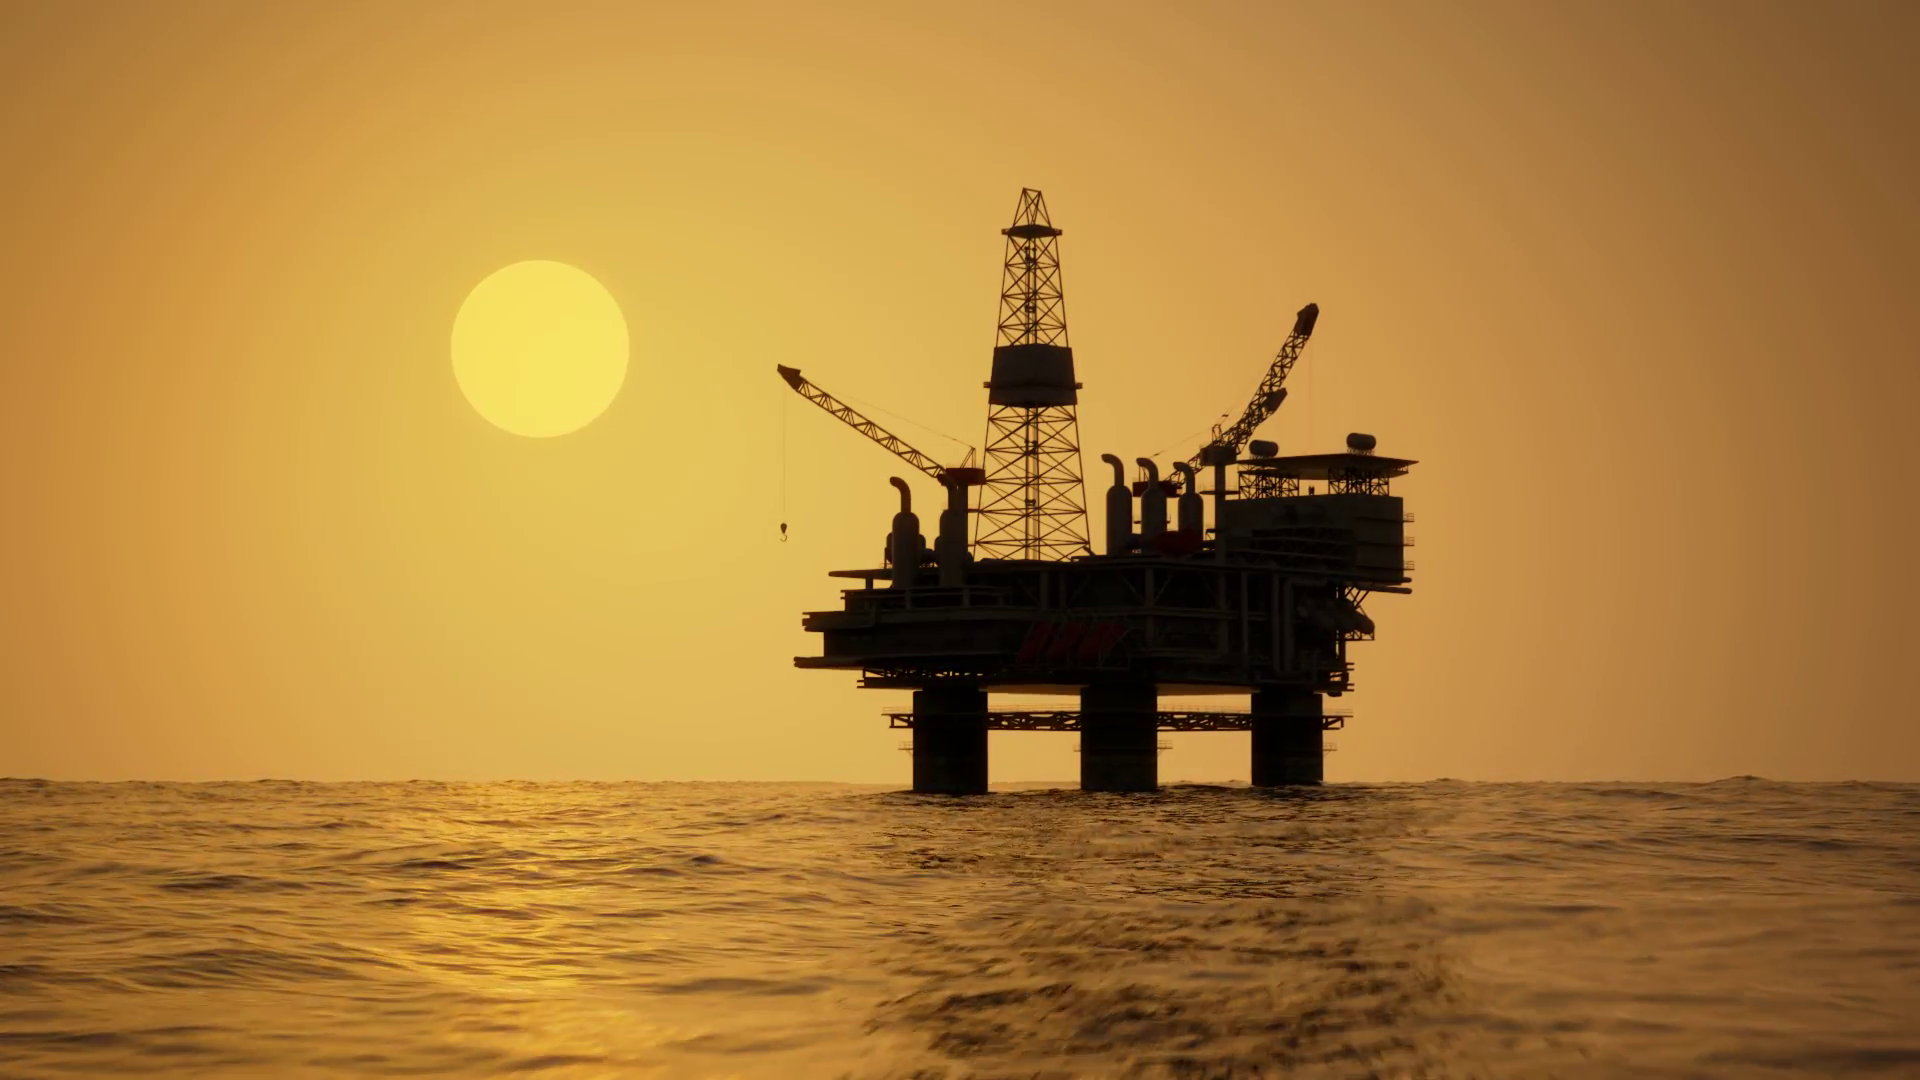 Oil Rig Drilling Platform Oce